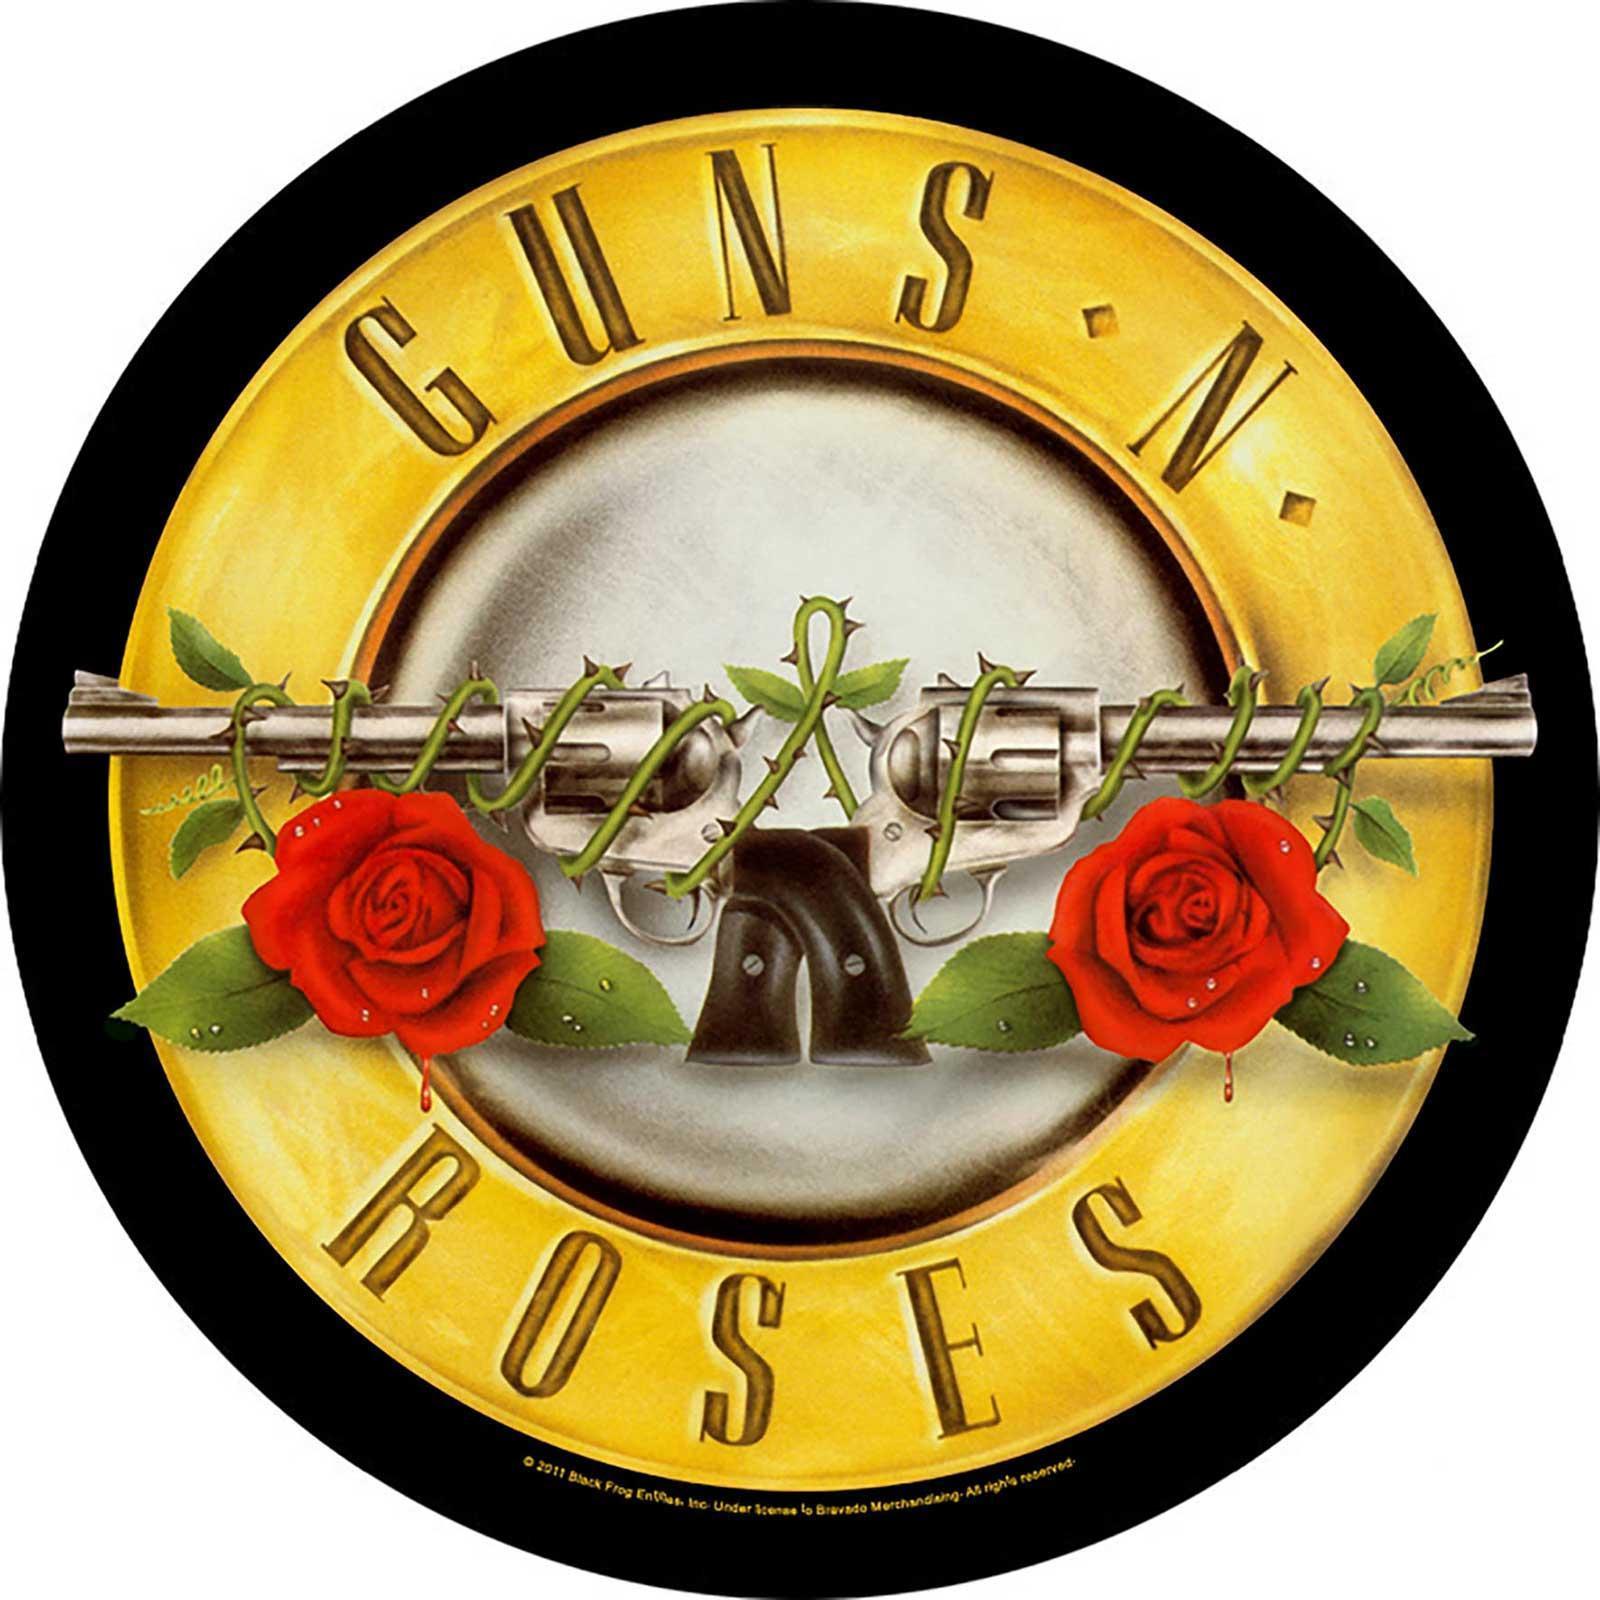 Guns N Roses Bullet Logo Patch (Gold/Black/Silver) (One Size)